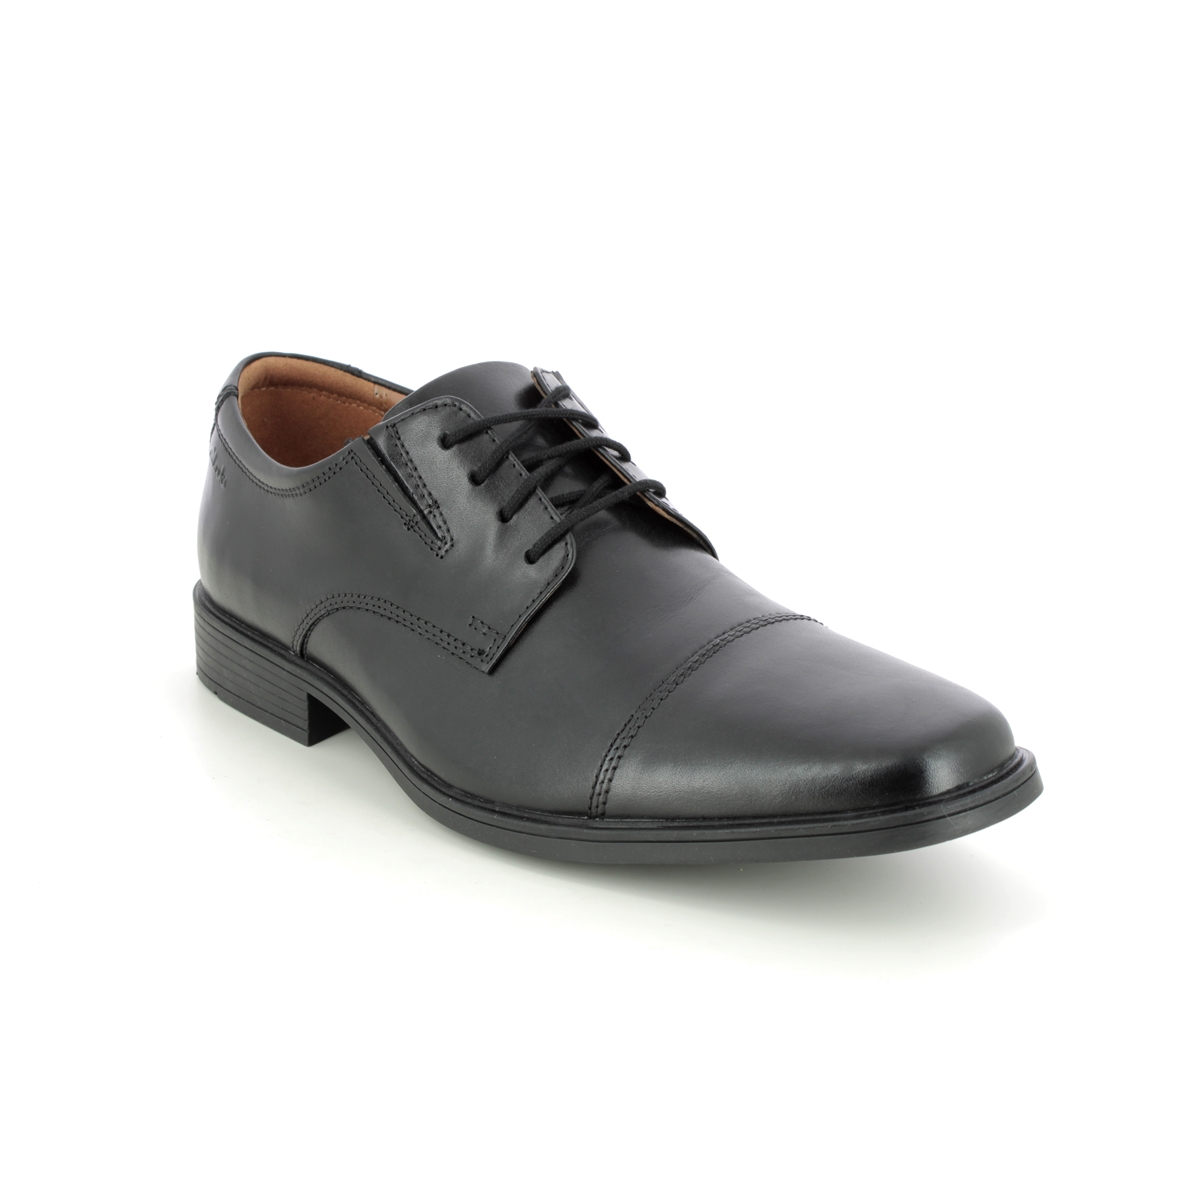 Clarks Tilden Cap Black Leather Mens Formal Shoes 103097G In Size 7 In Plain Black Leather G Width Fitting